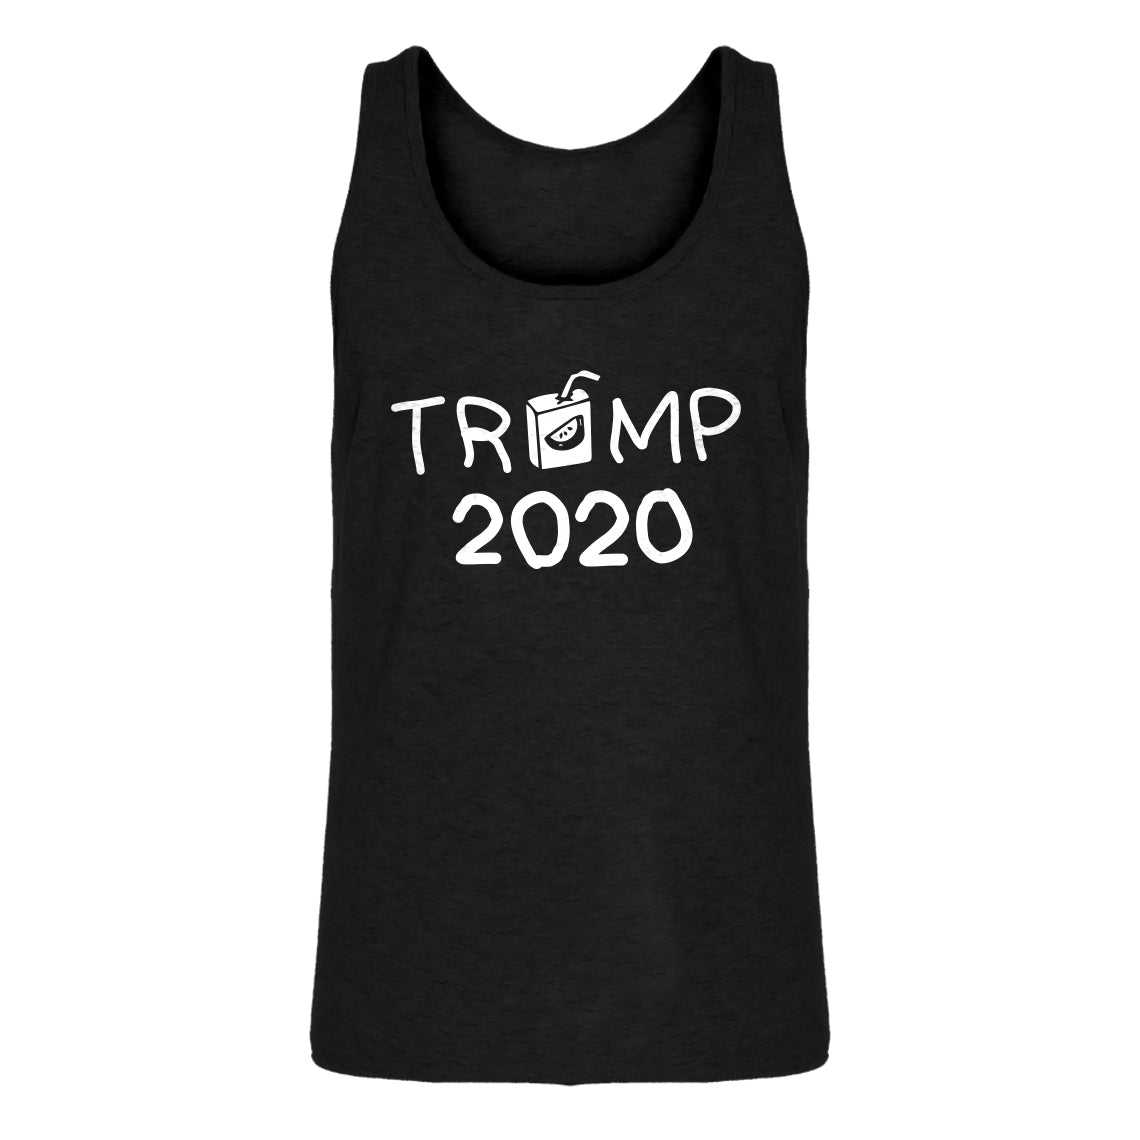 Mens Trump 2020 Jersey Tank Top